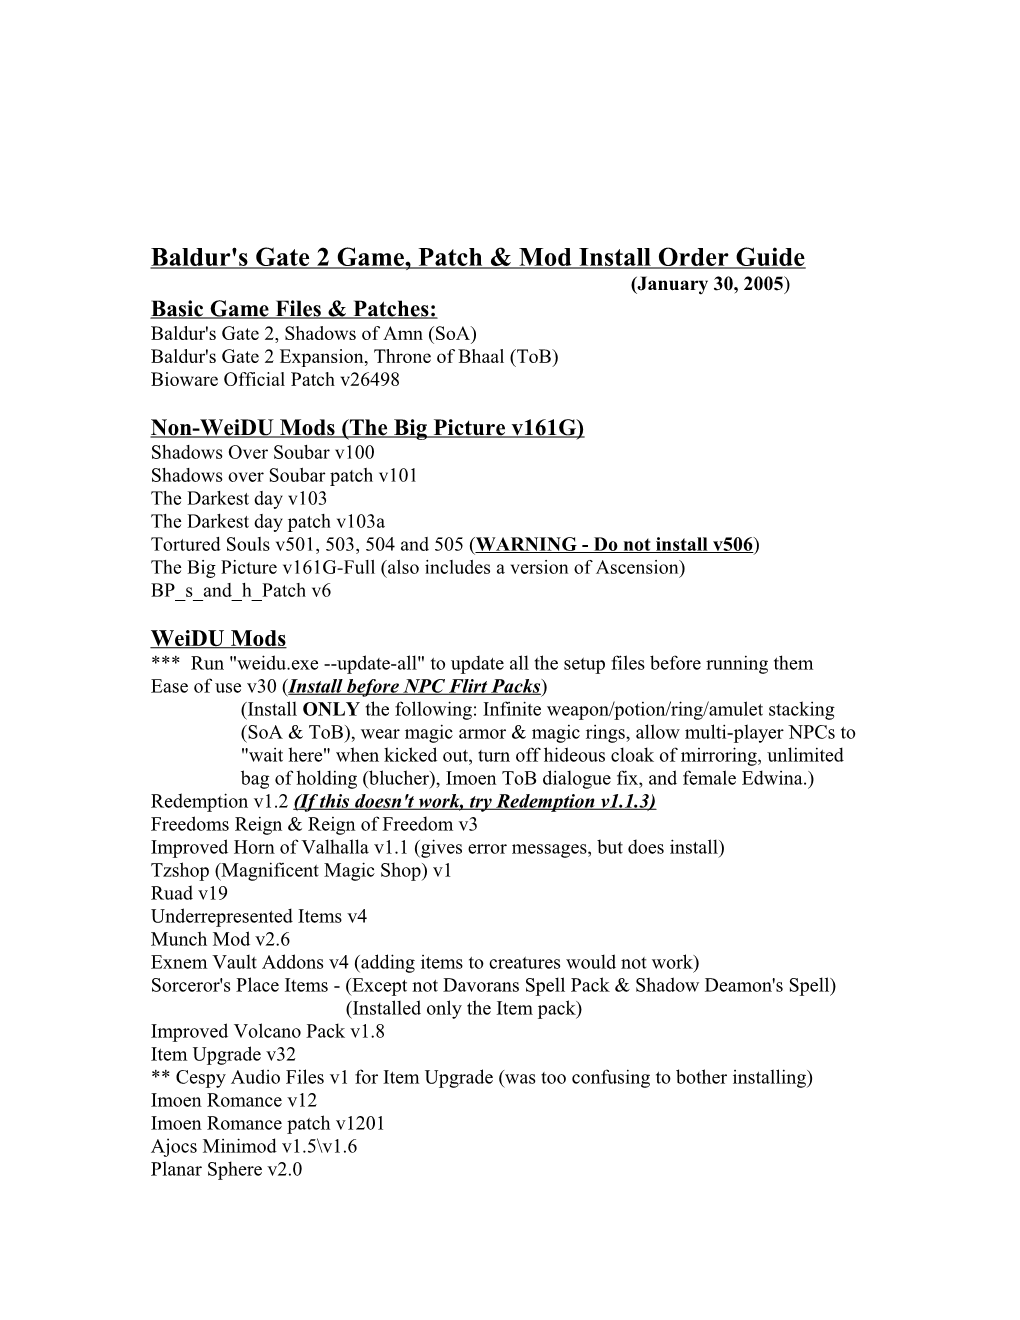 Baldur's Gate 2 Files